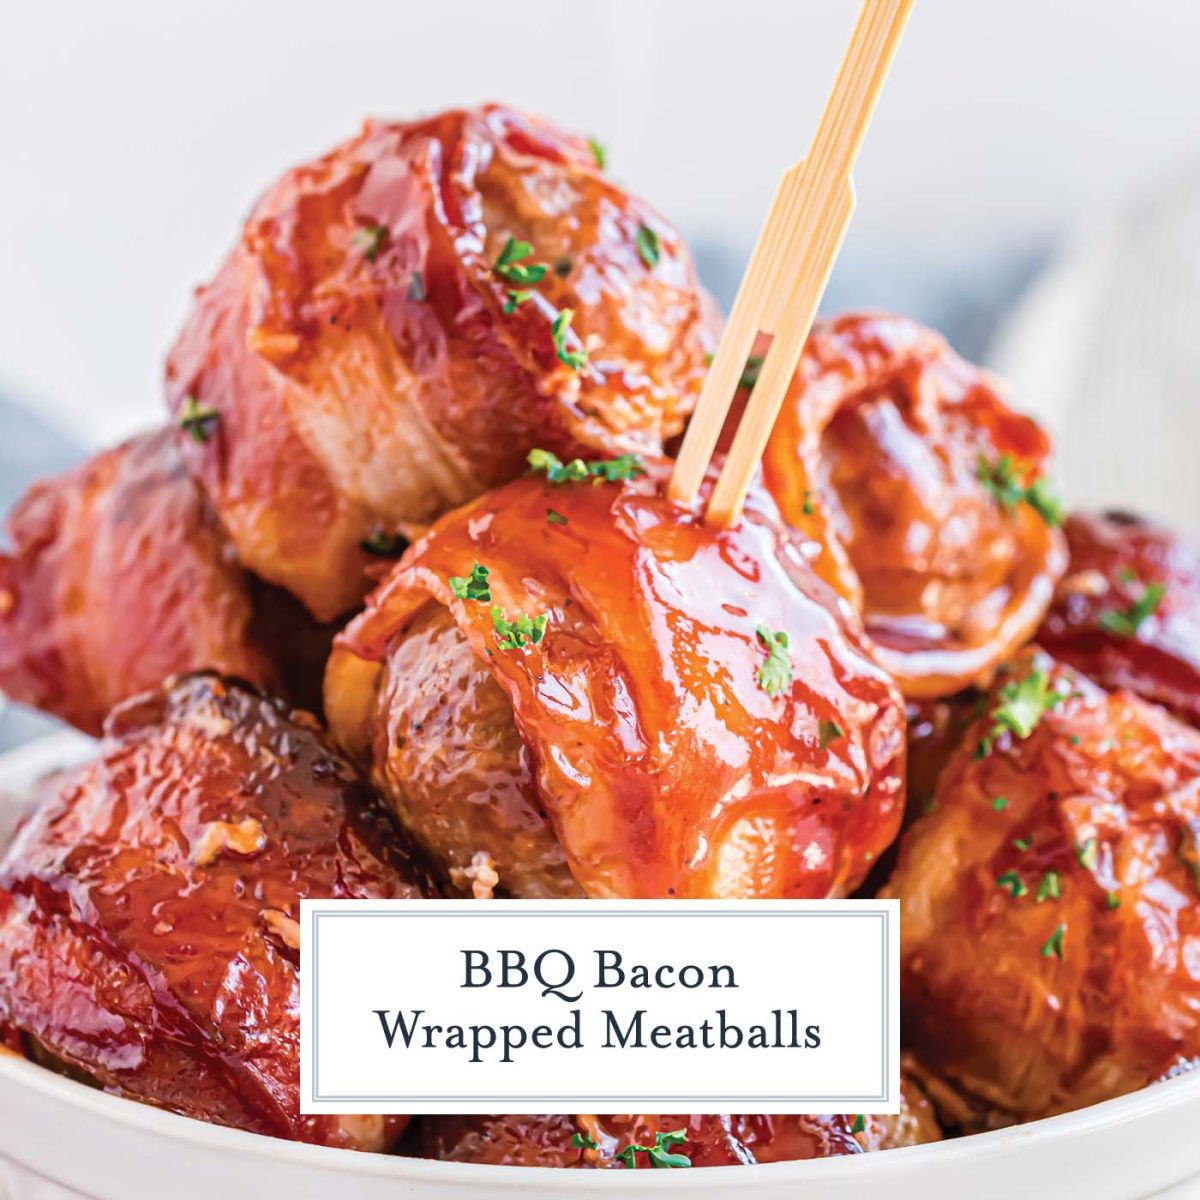 https://www.savoryexperiments.com/wp-content/uploads/2022/01/BBQ-Bacon-Wrapped-Meatballs-FB-1200x1200.jpg